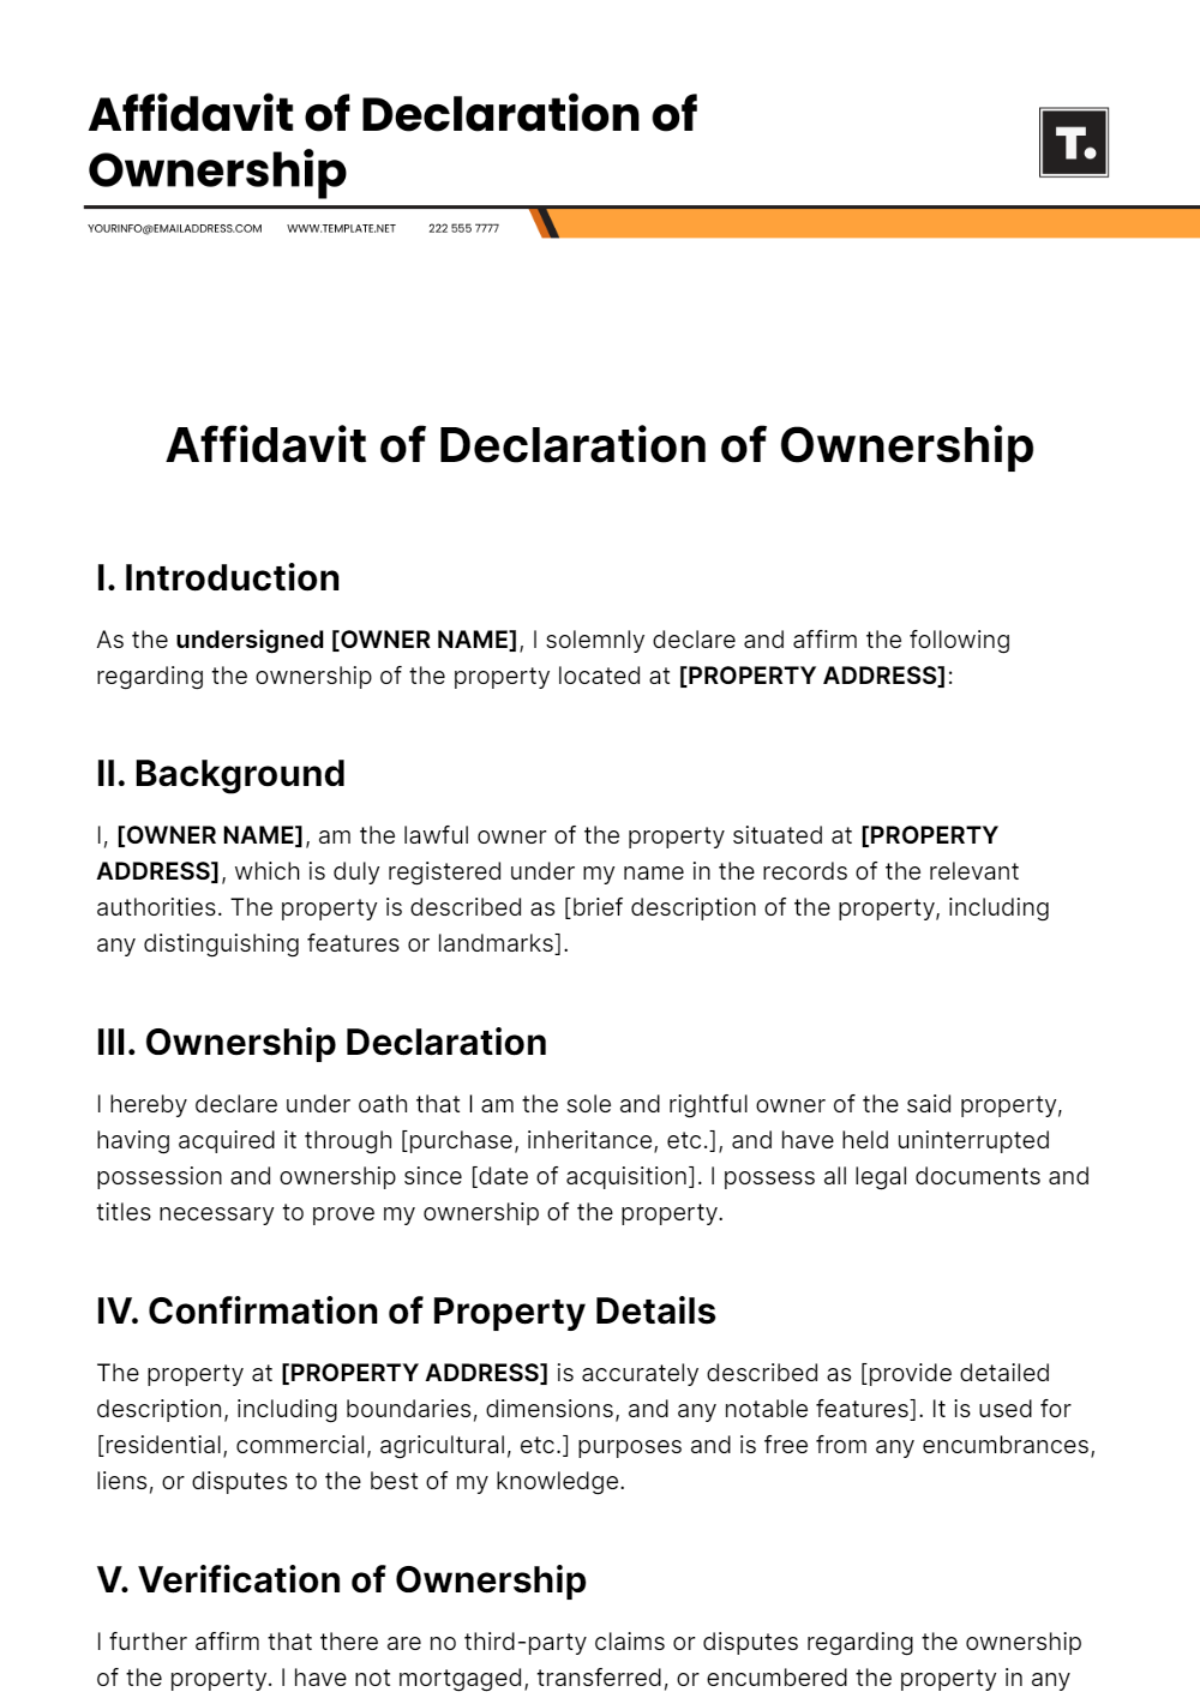 Affidavit of Declaration of Ownership Template